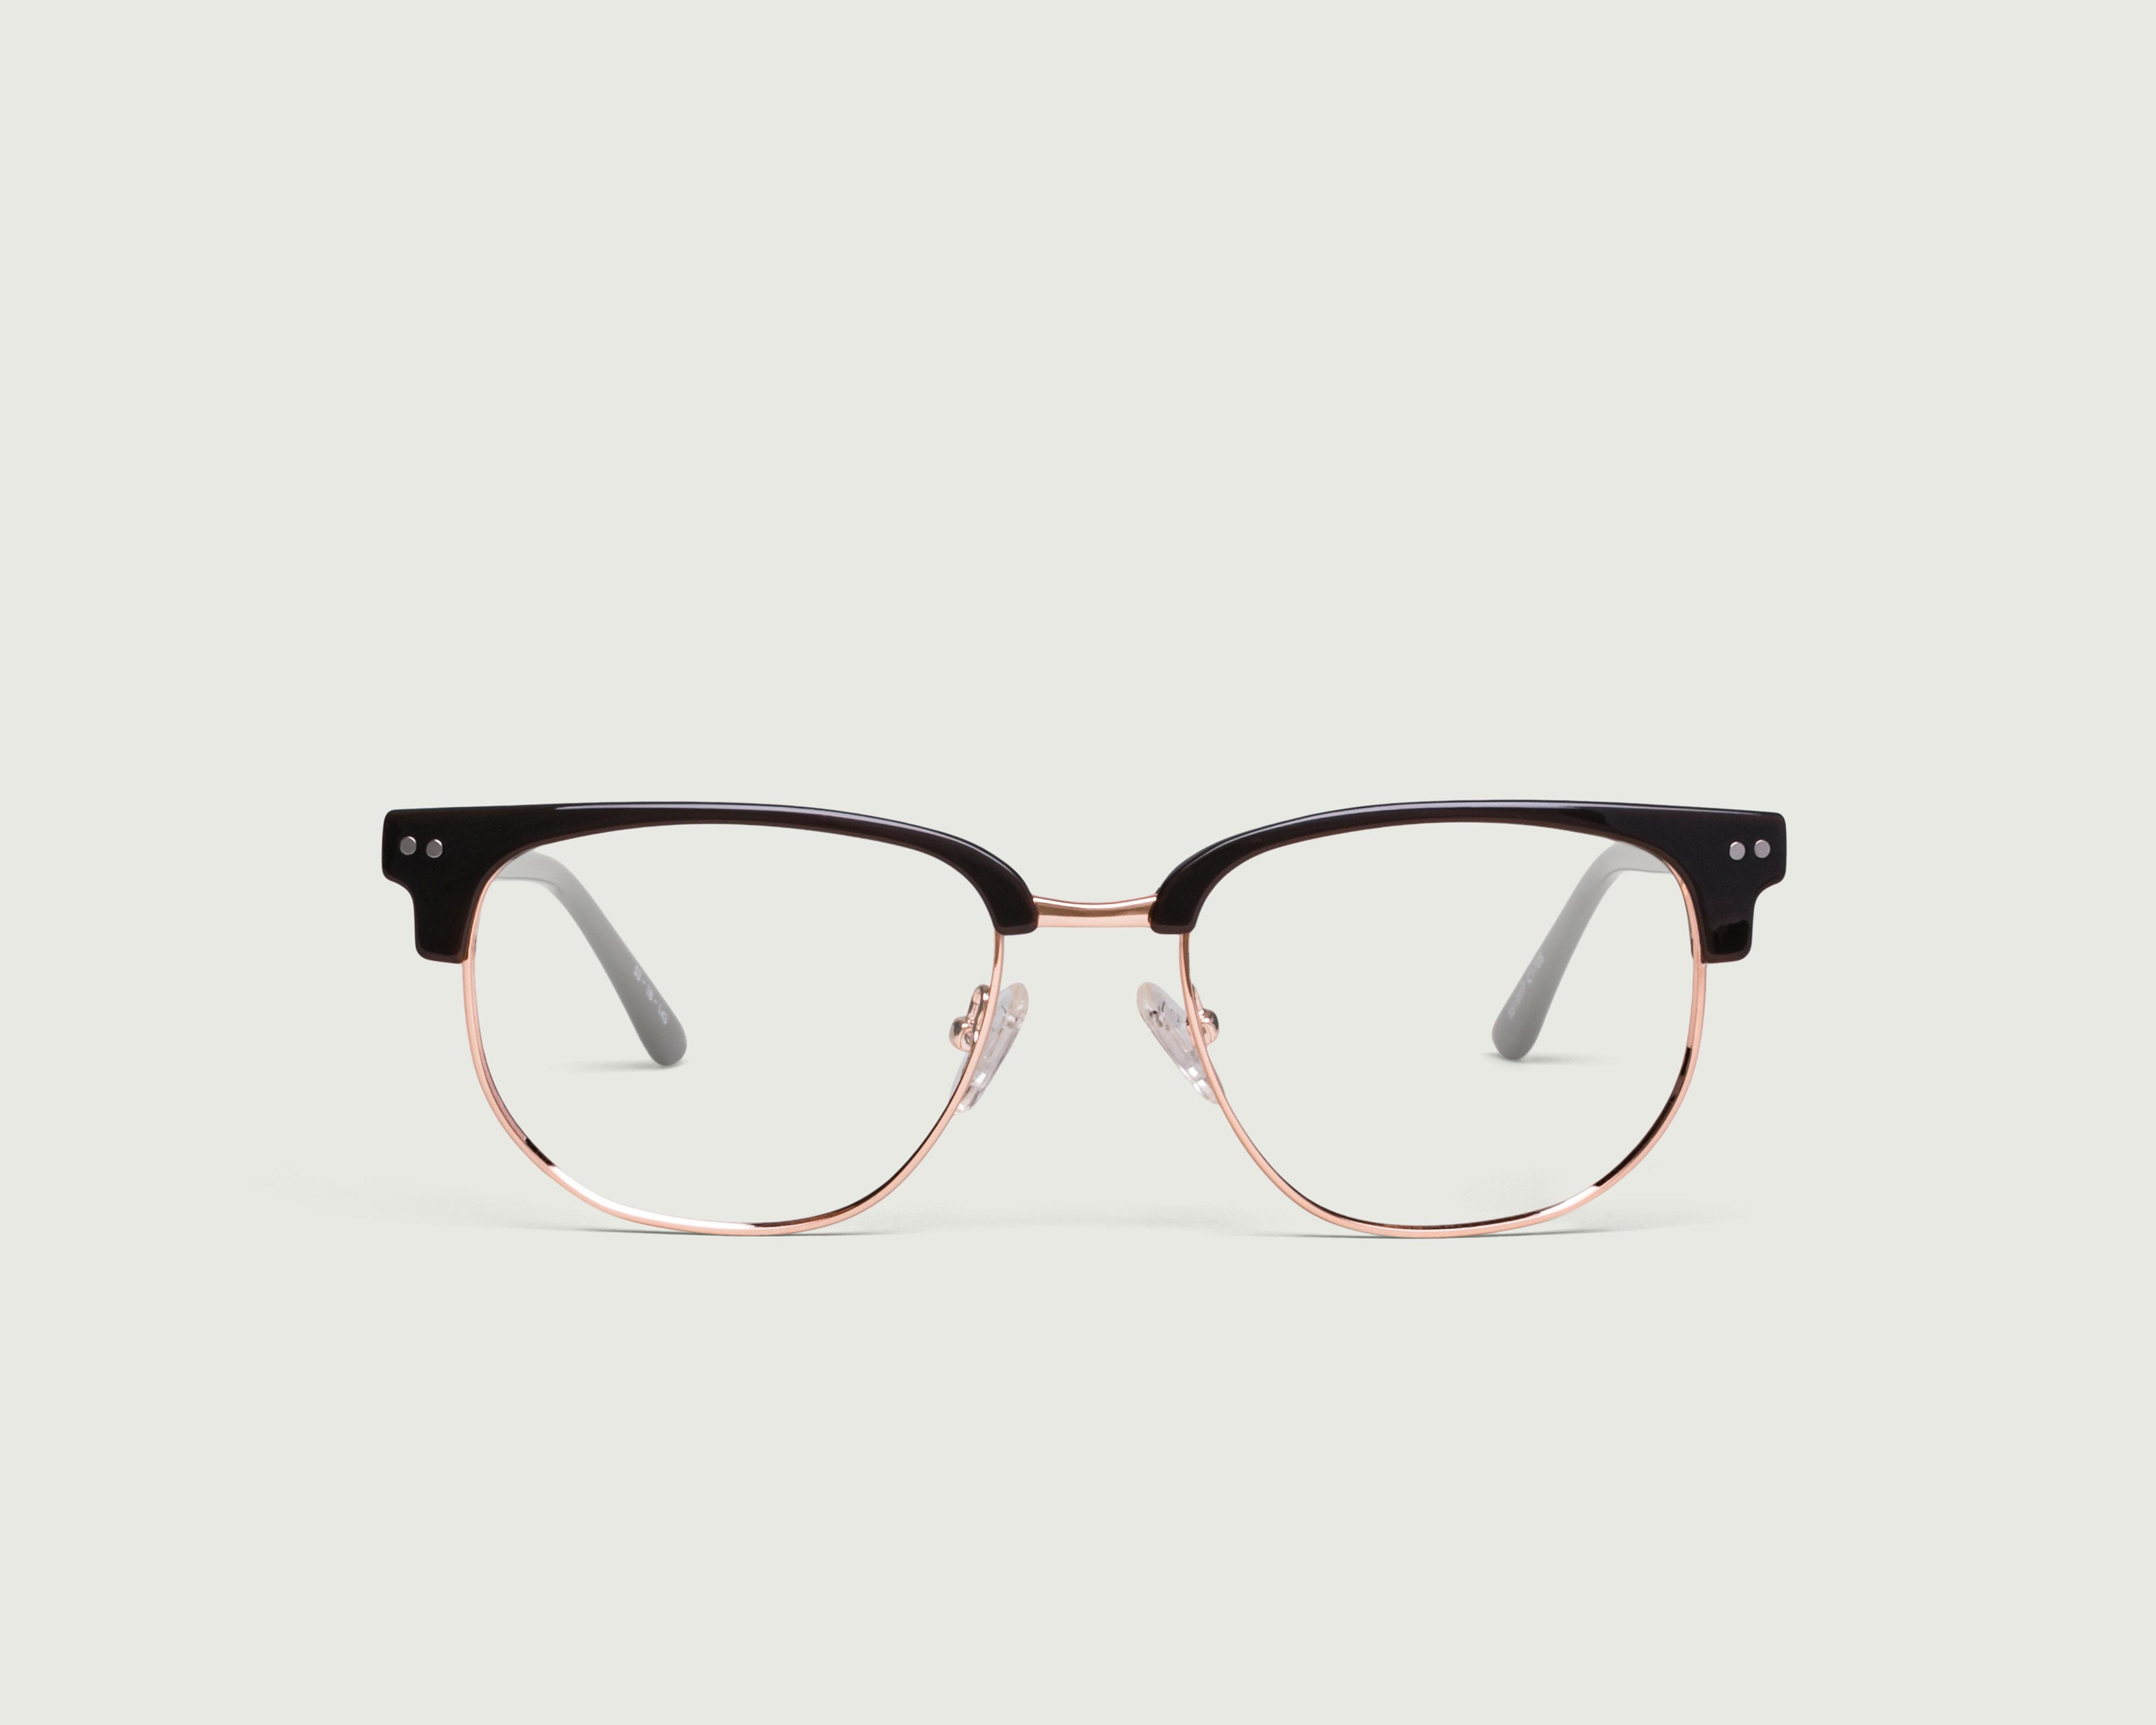 Walnut::Madison Eyeglasses browline brown plastic front